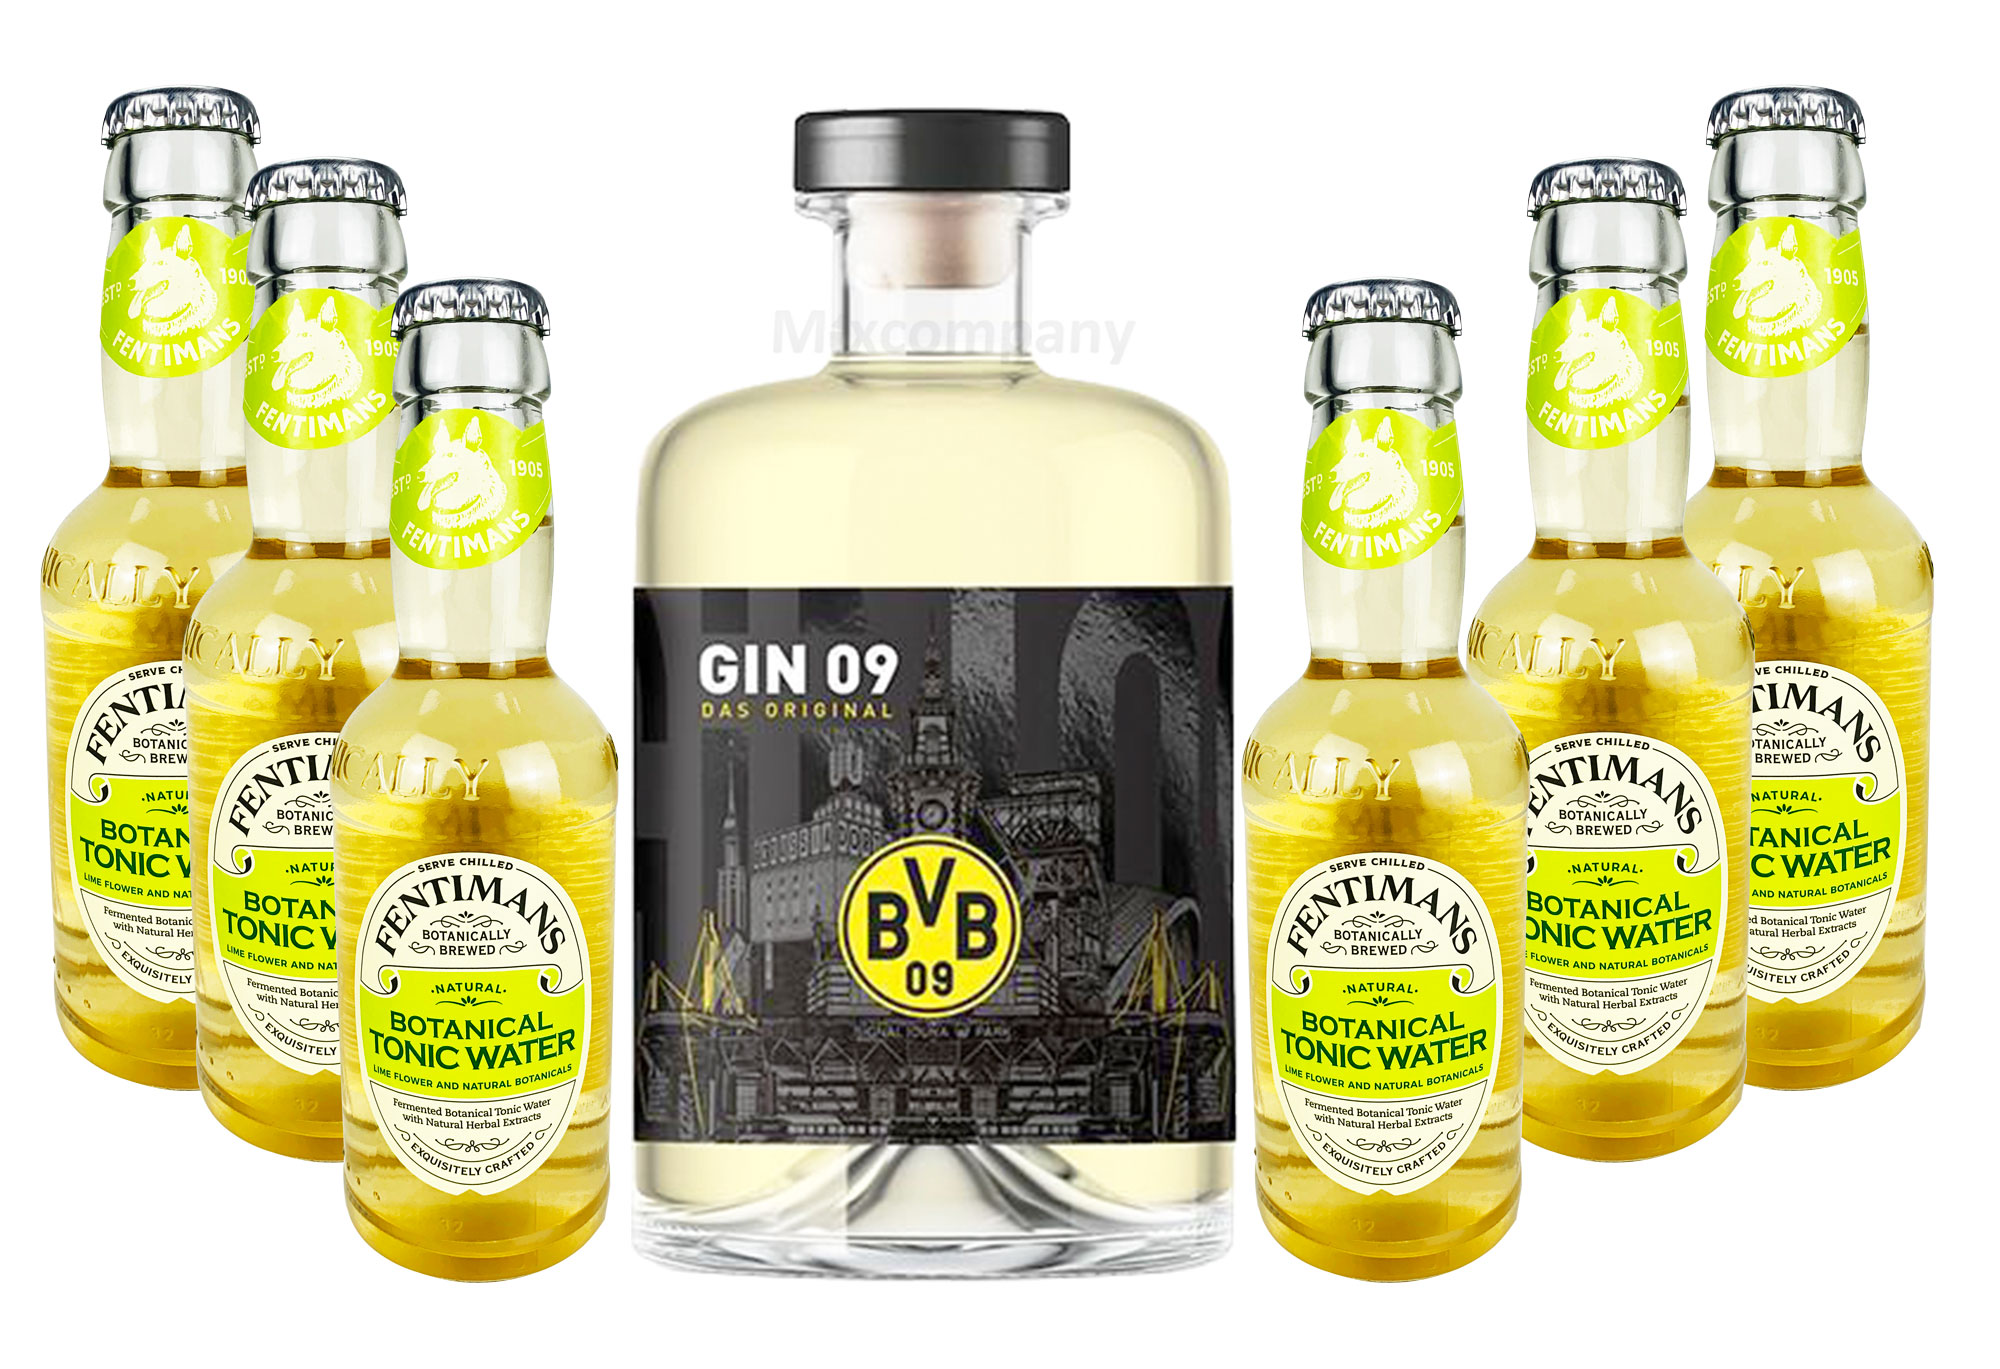 BVB Gin 09 Das Original 0,5l 500ml (43% Vol) + 6xFentimans Botanical Tonic Water 0,2l MEHRWEG inkl. Pfand Gin Tonic Bar- [Enthält Sulfite]